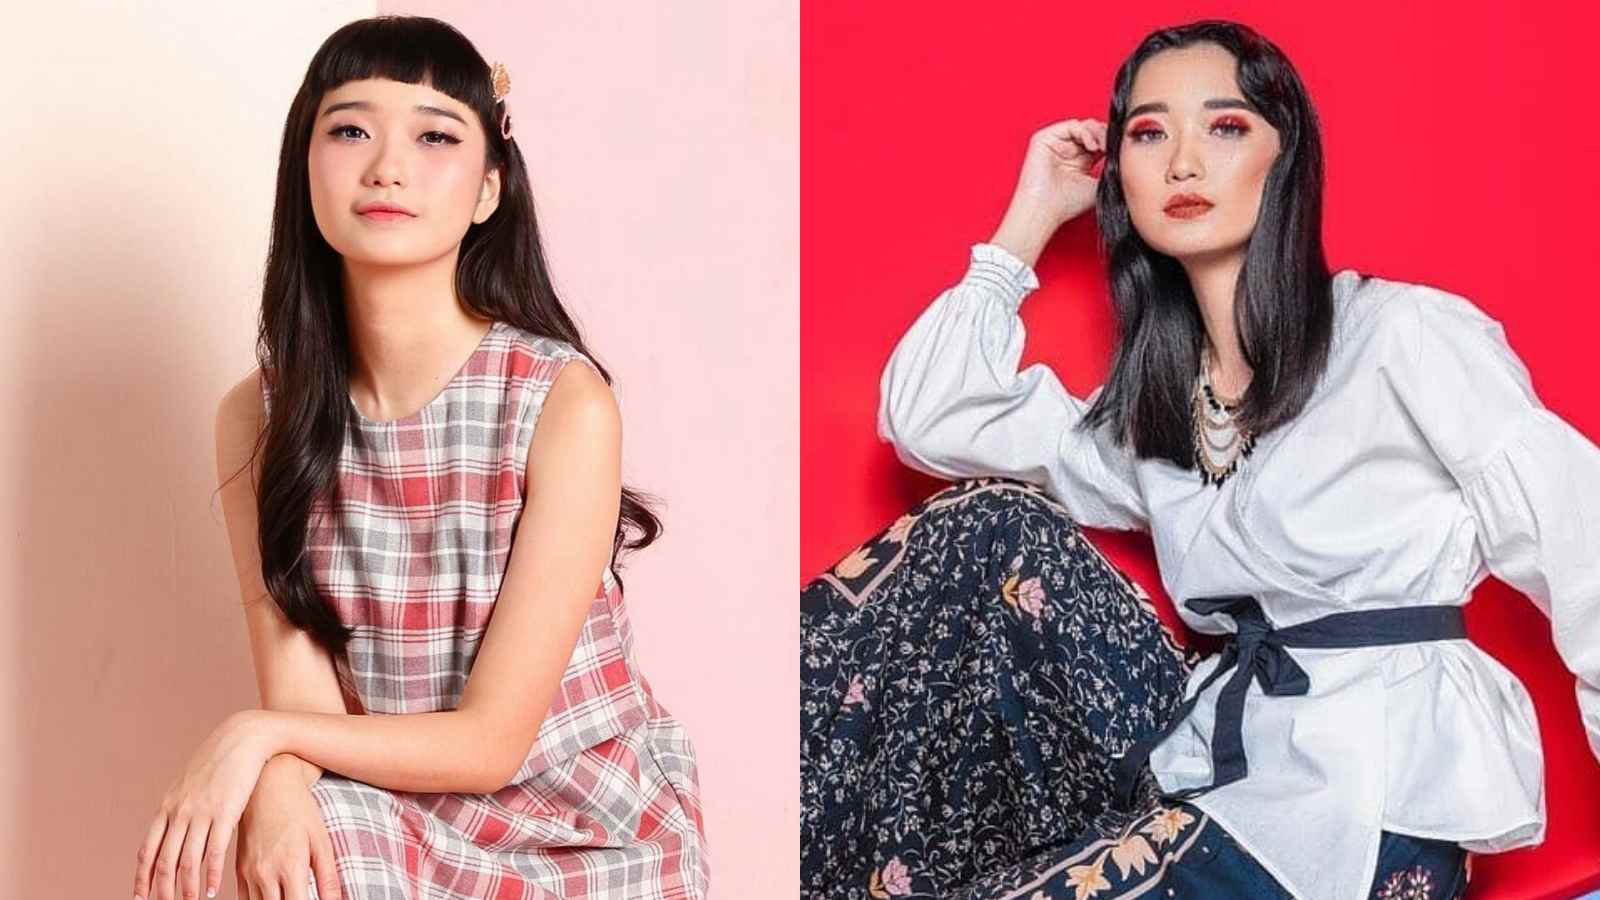 Fakta dan Profil Tiffany Zhu, Peserta Indonesia’s Next Top Model Cycle 2